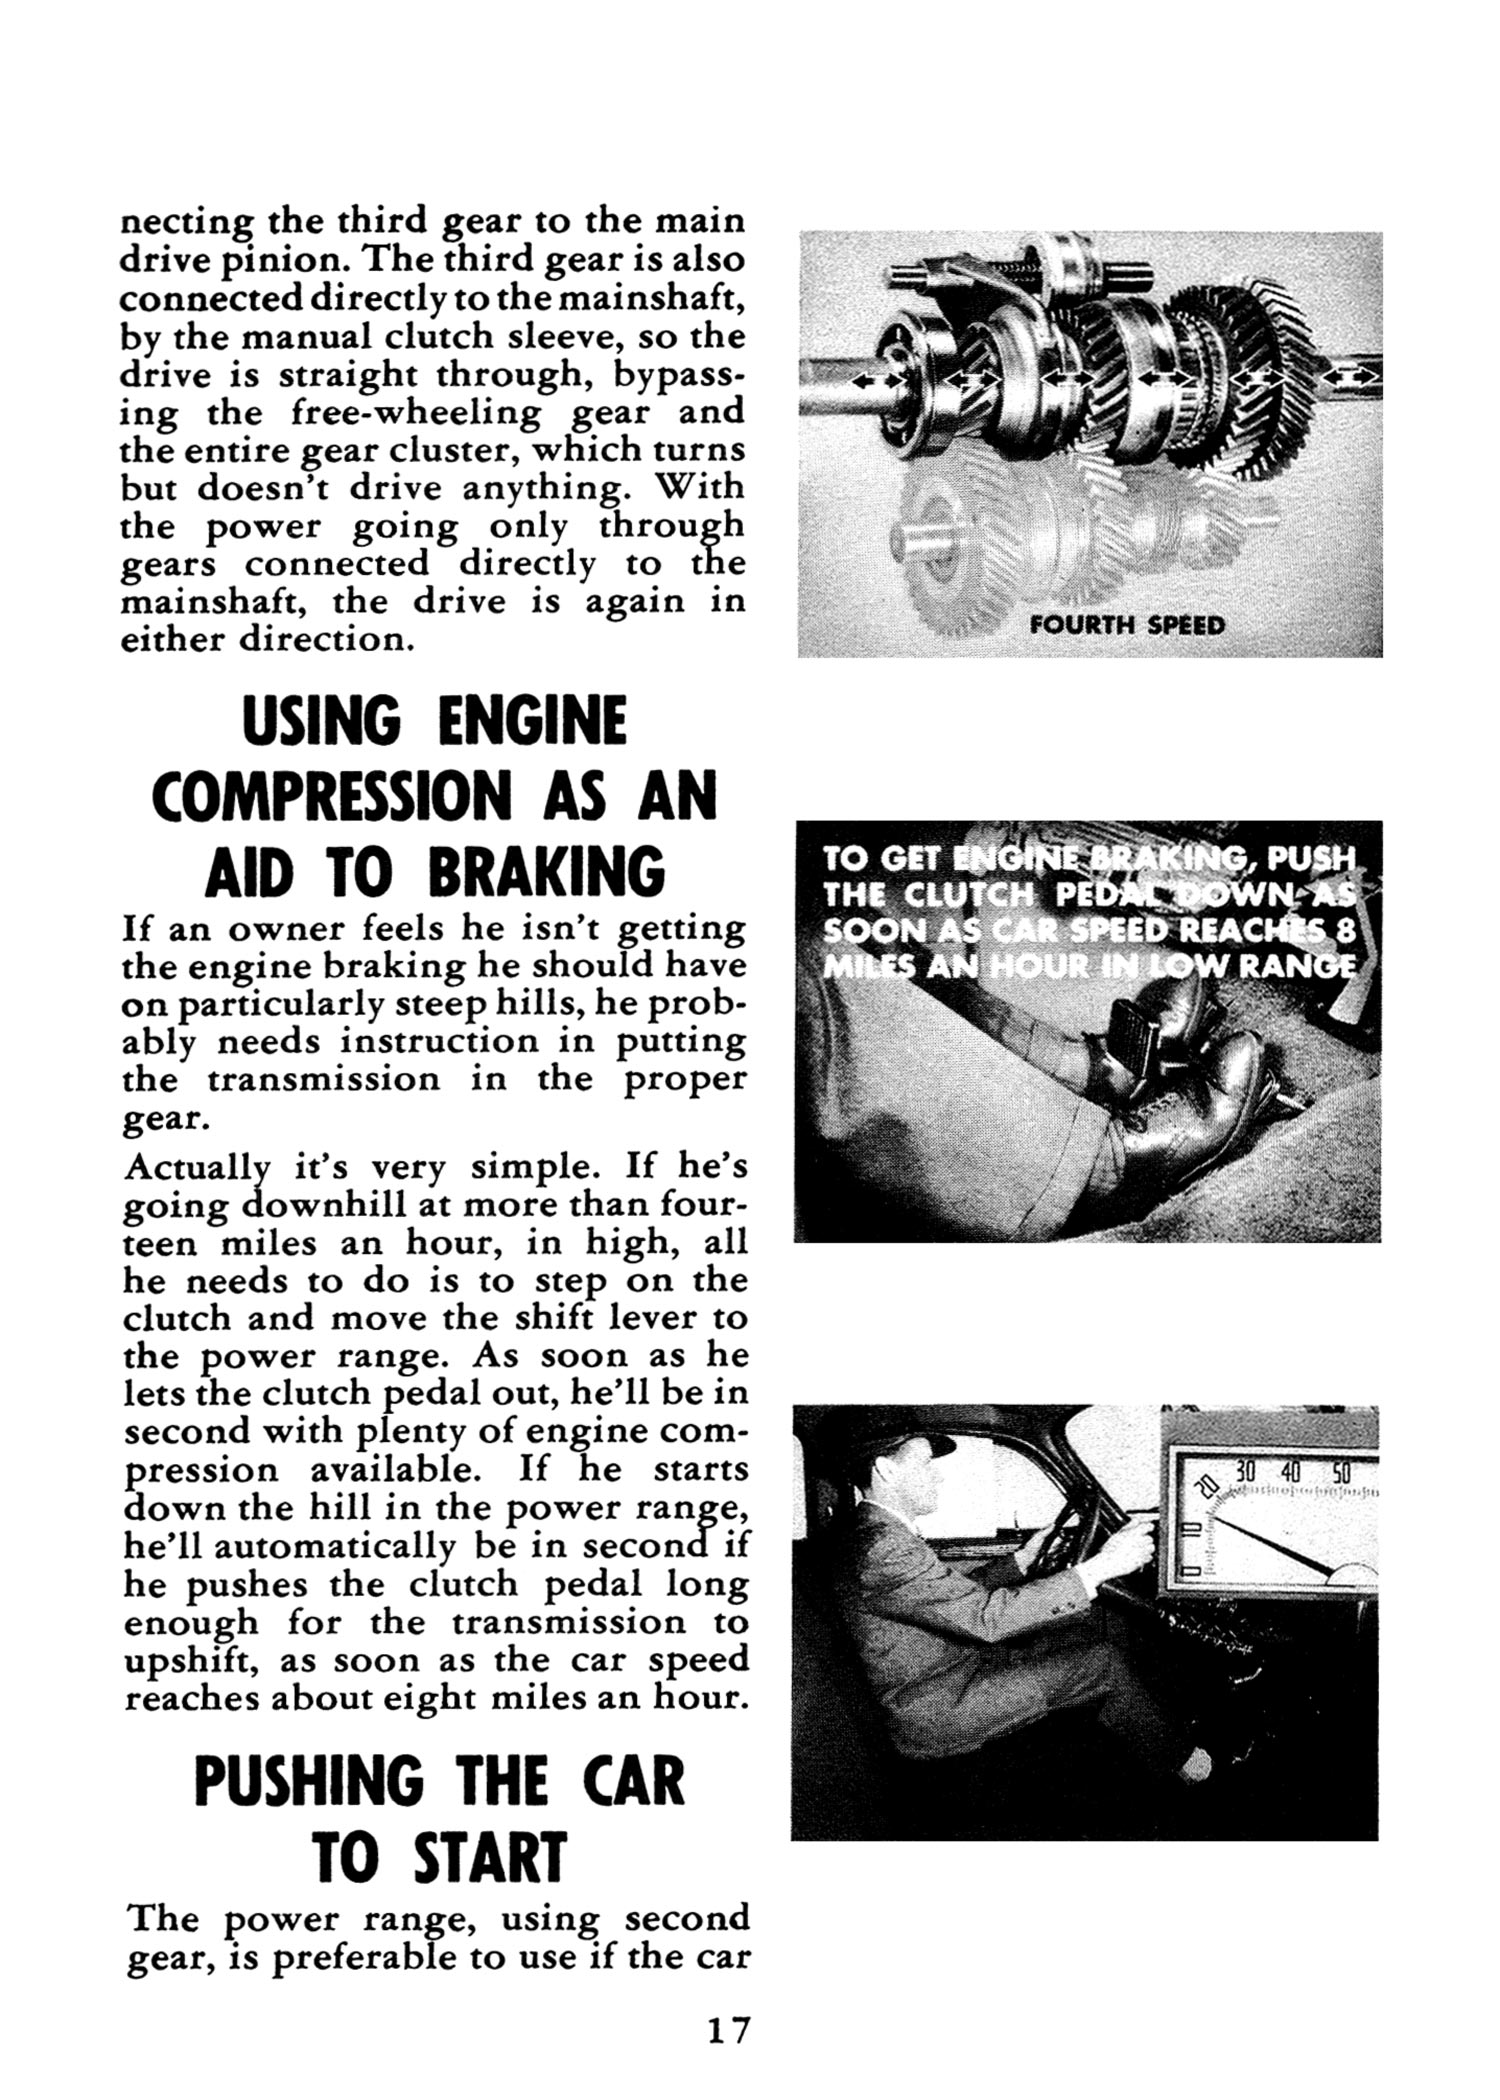 1948_Chrysler_Fluid_Drive-17